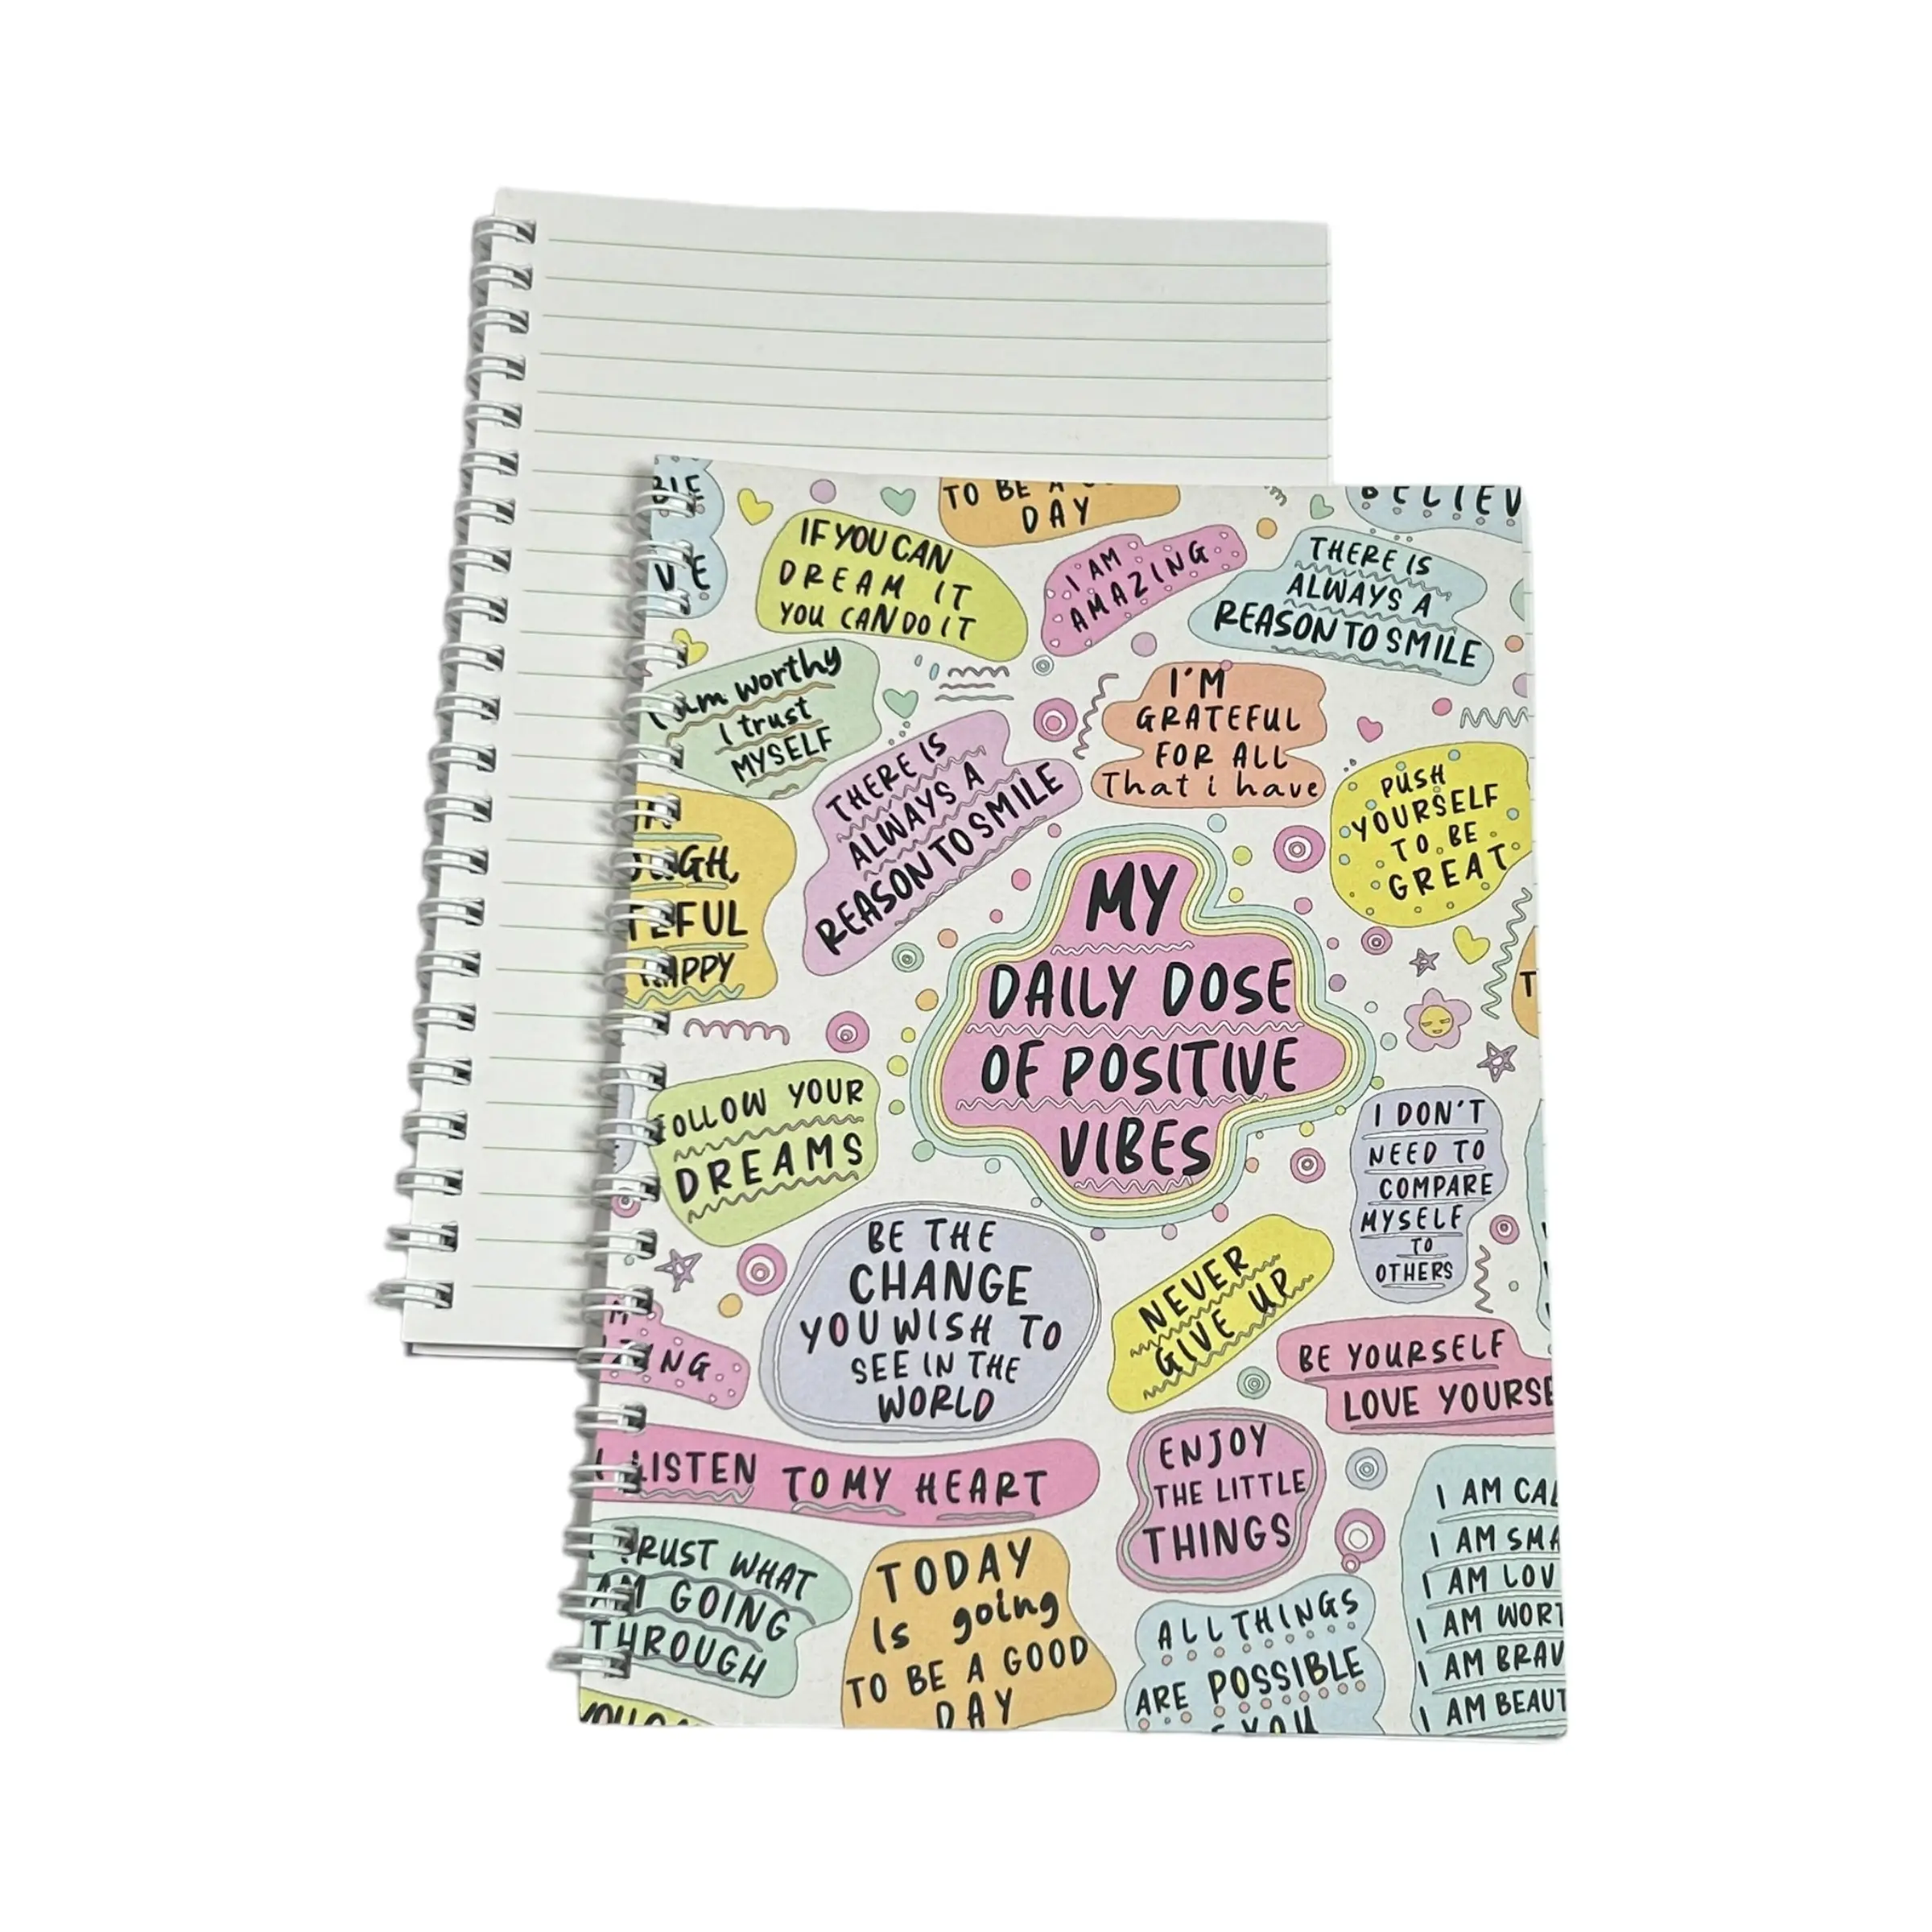 Notebook A5 kutipan komik inspirasional kutipan senyum Yalla desain buku salinan notebook disesuaikan dengan desain yang unik